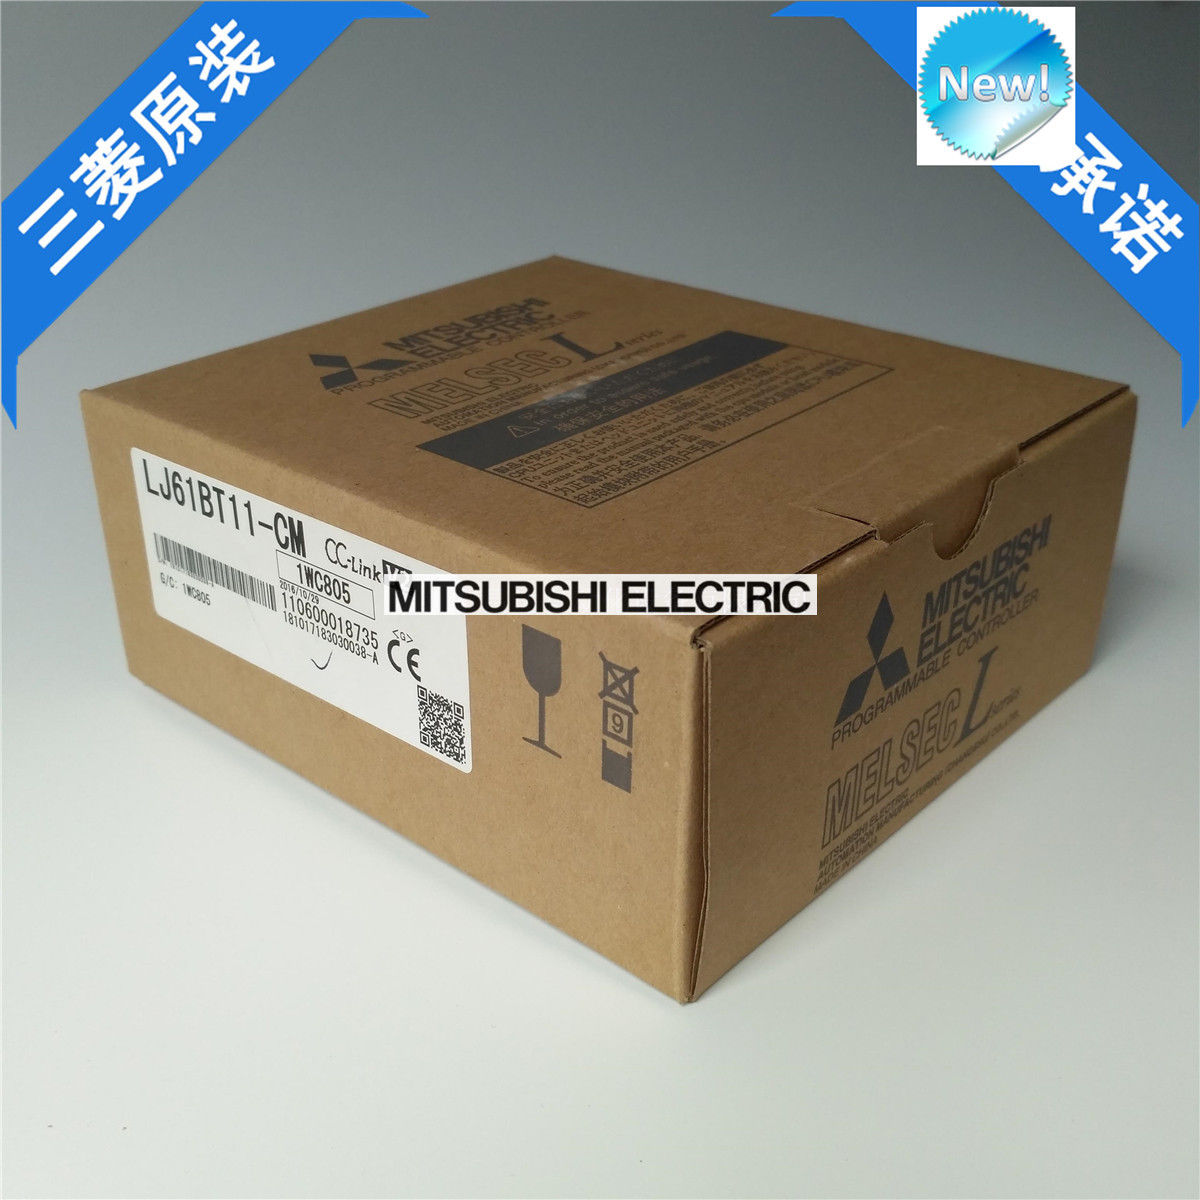 Brand New Mitsubishi PLC LJ61BT11-CM In Box LJ61BT11CM - Click Image to Close